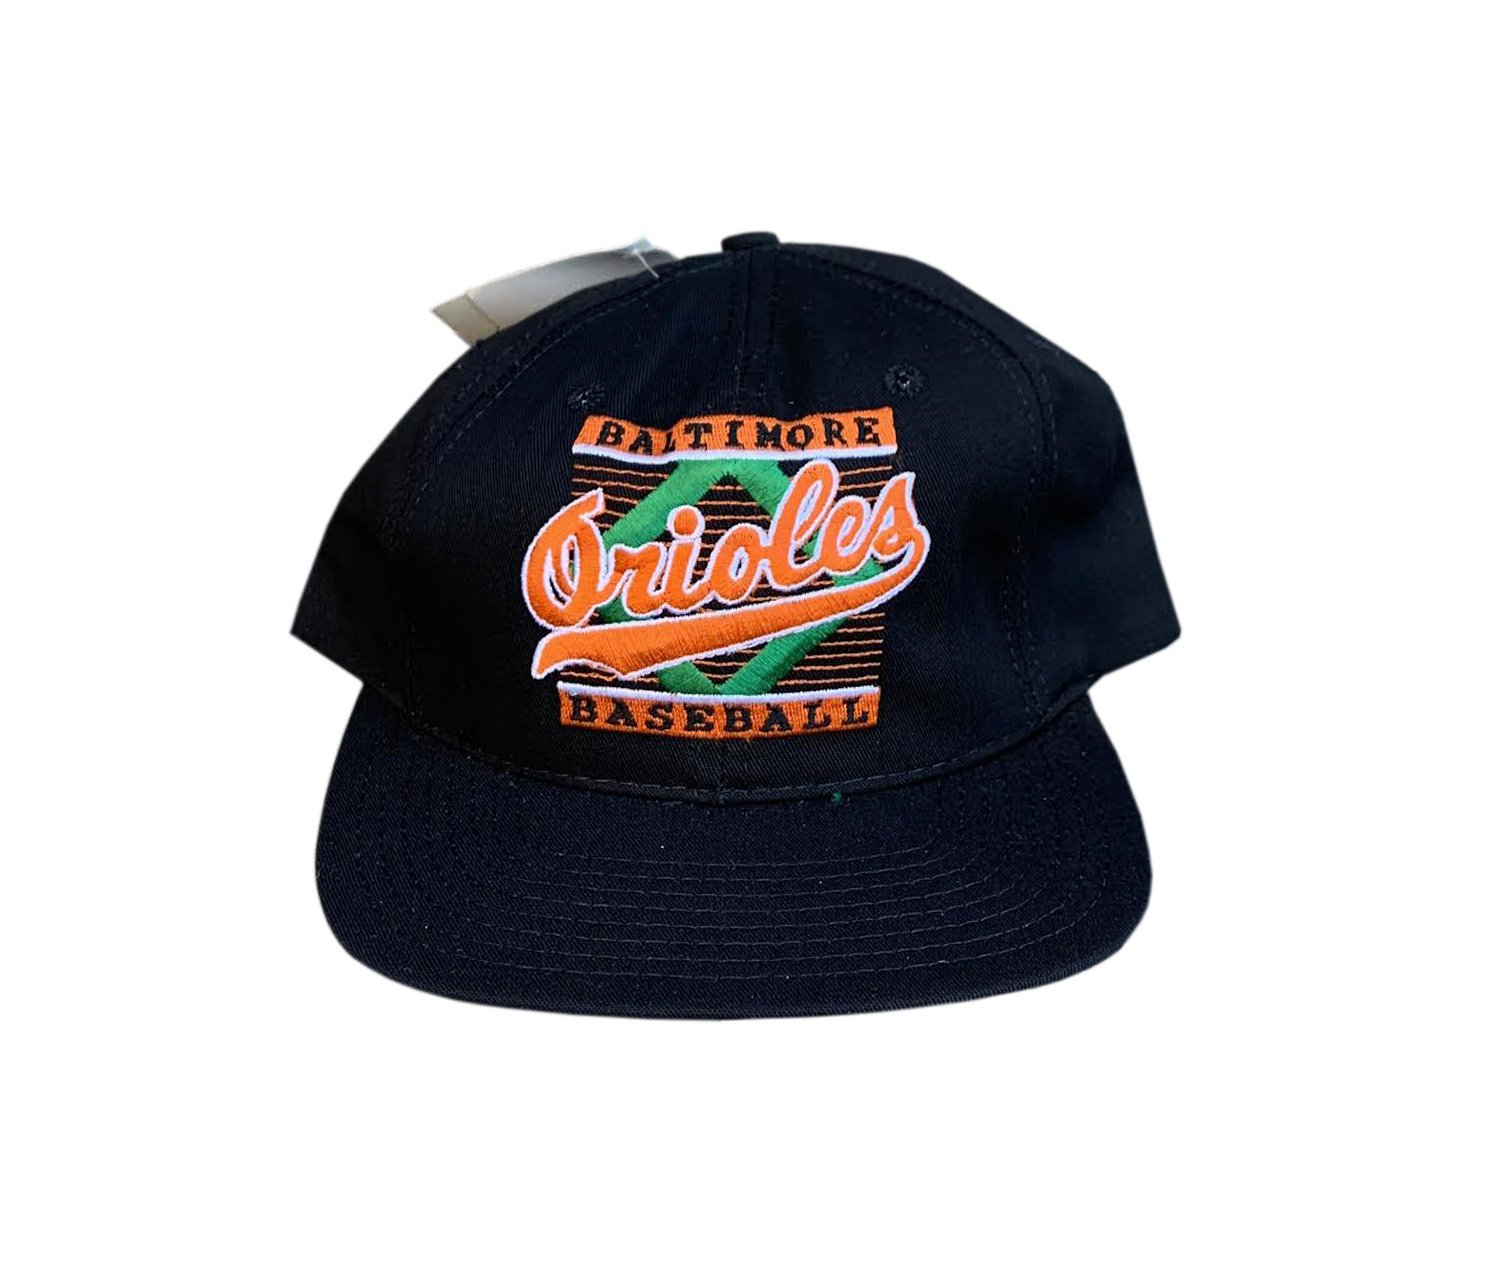 Vintage The Game Baltimore Orioles Black / Orange Snapback Hat NWT